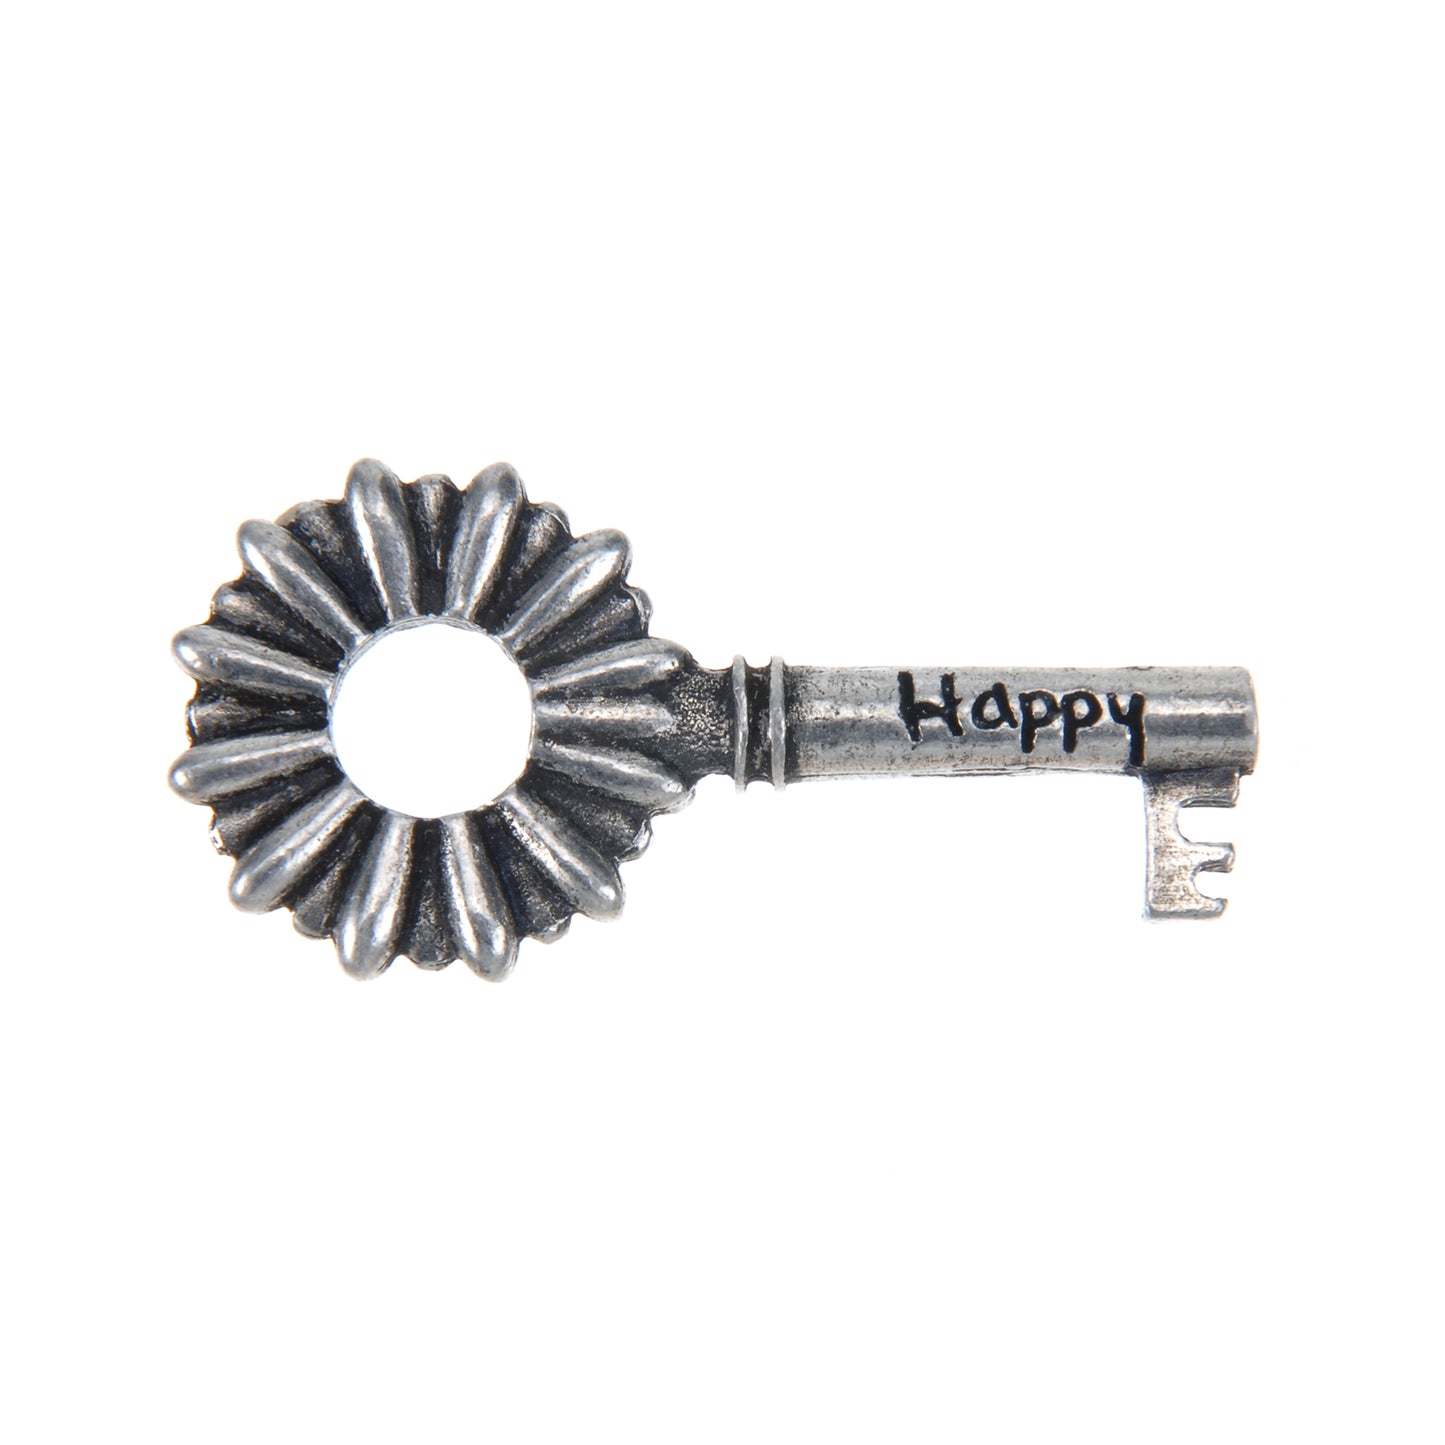 Happy Key Charm